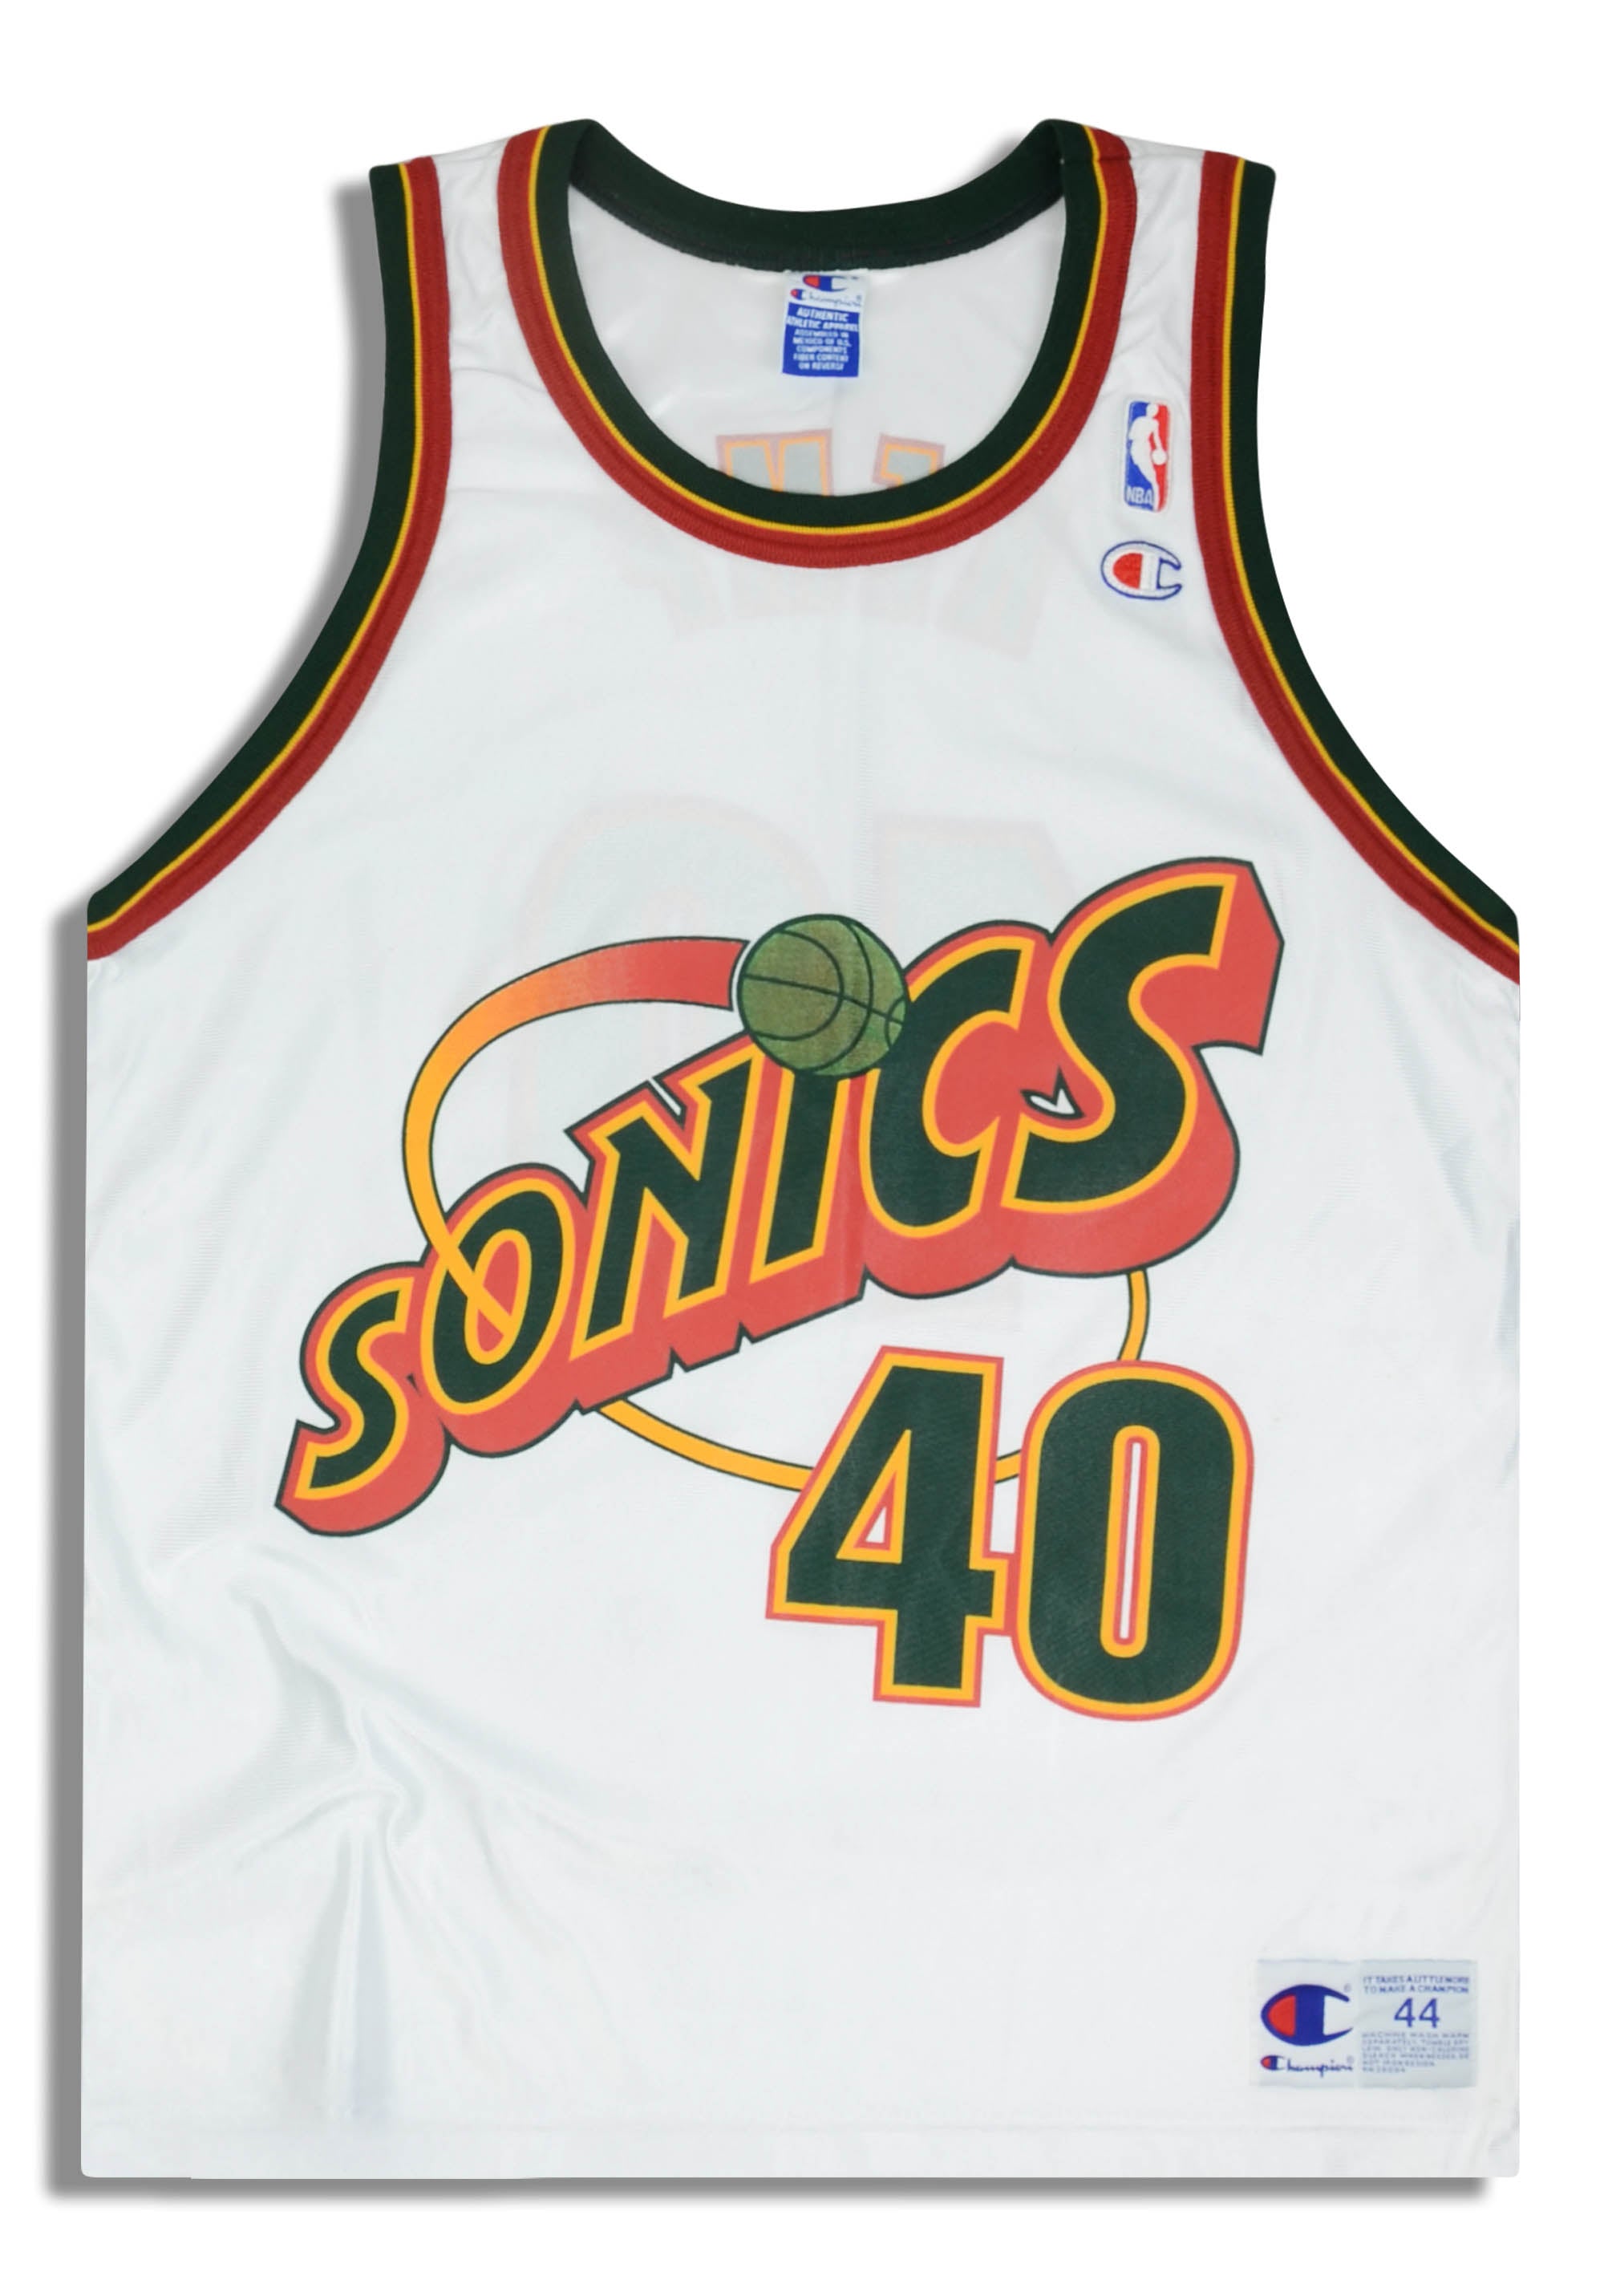 96 sonics jerseys